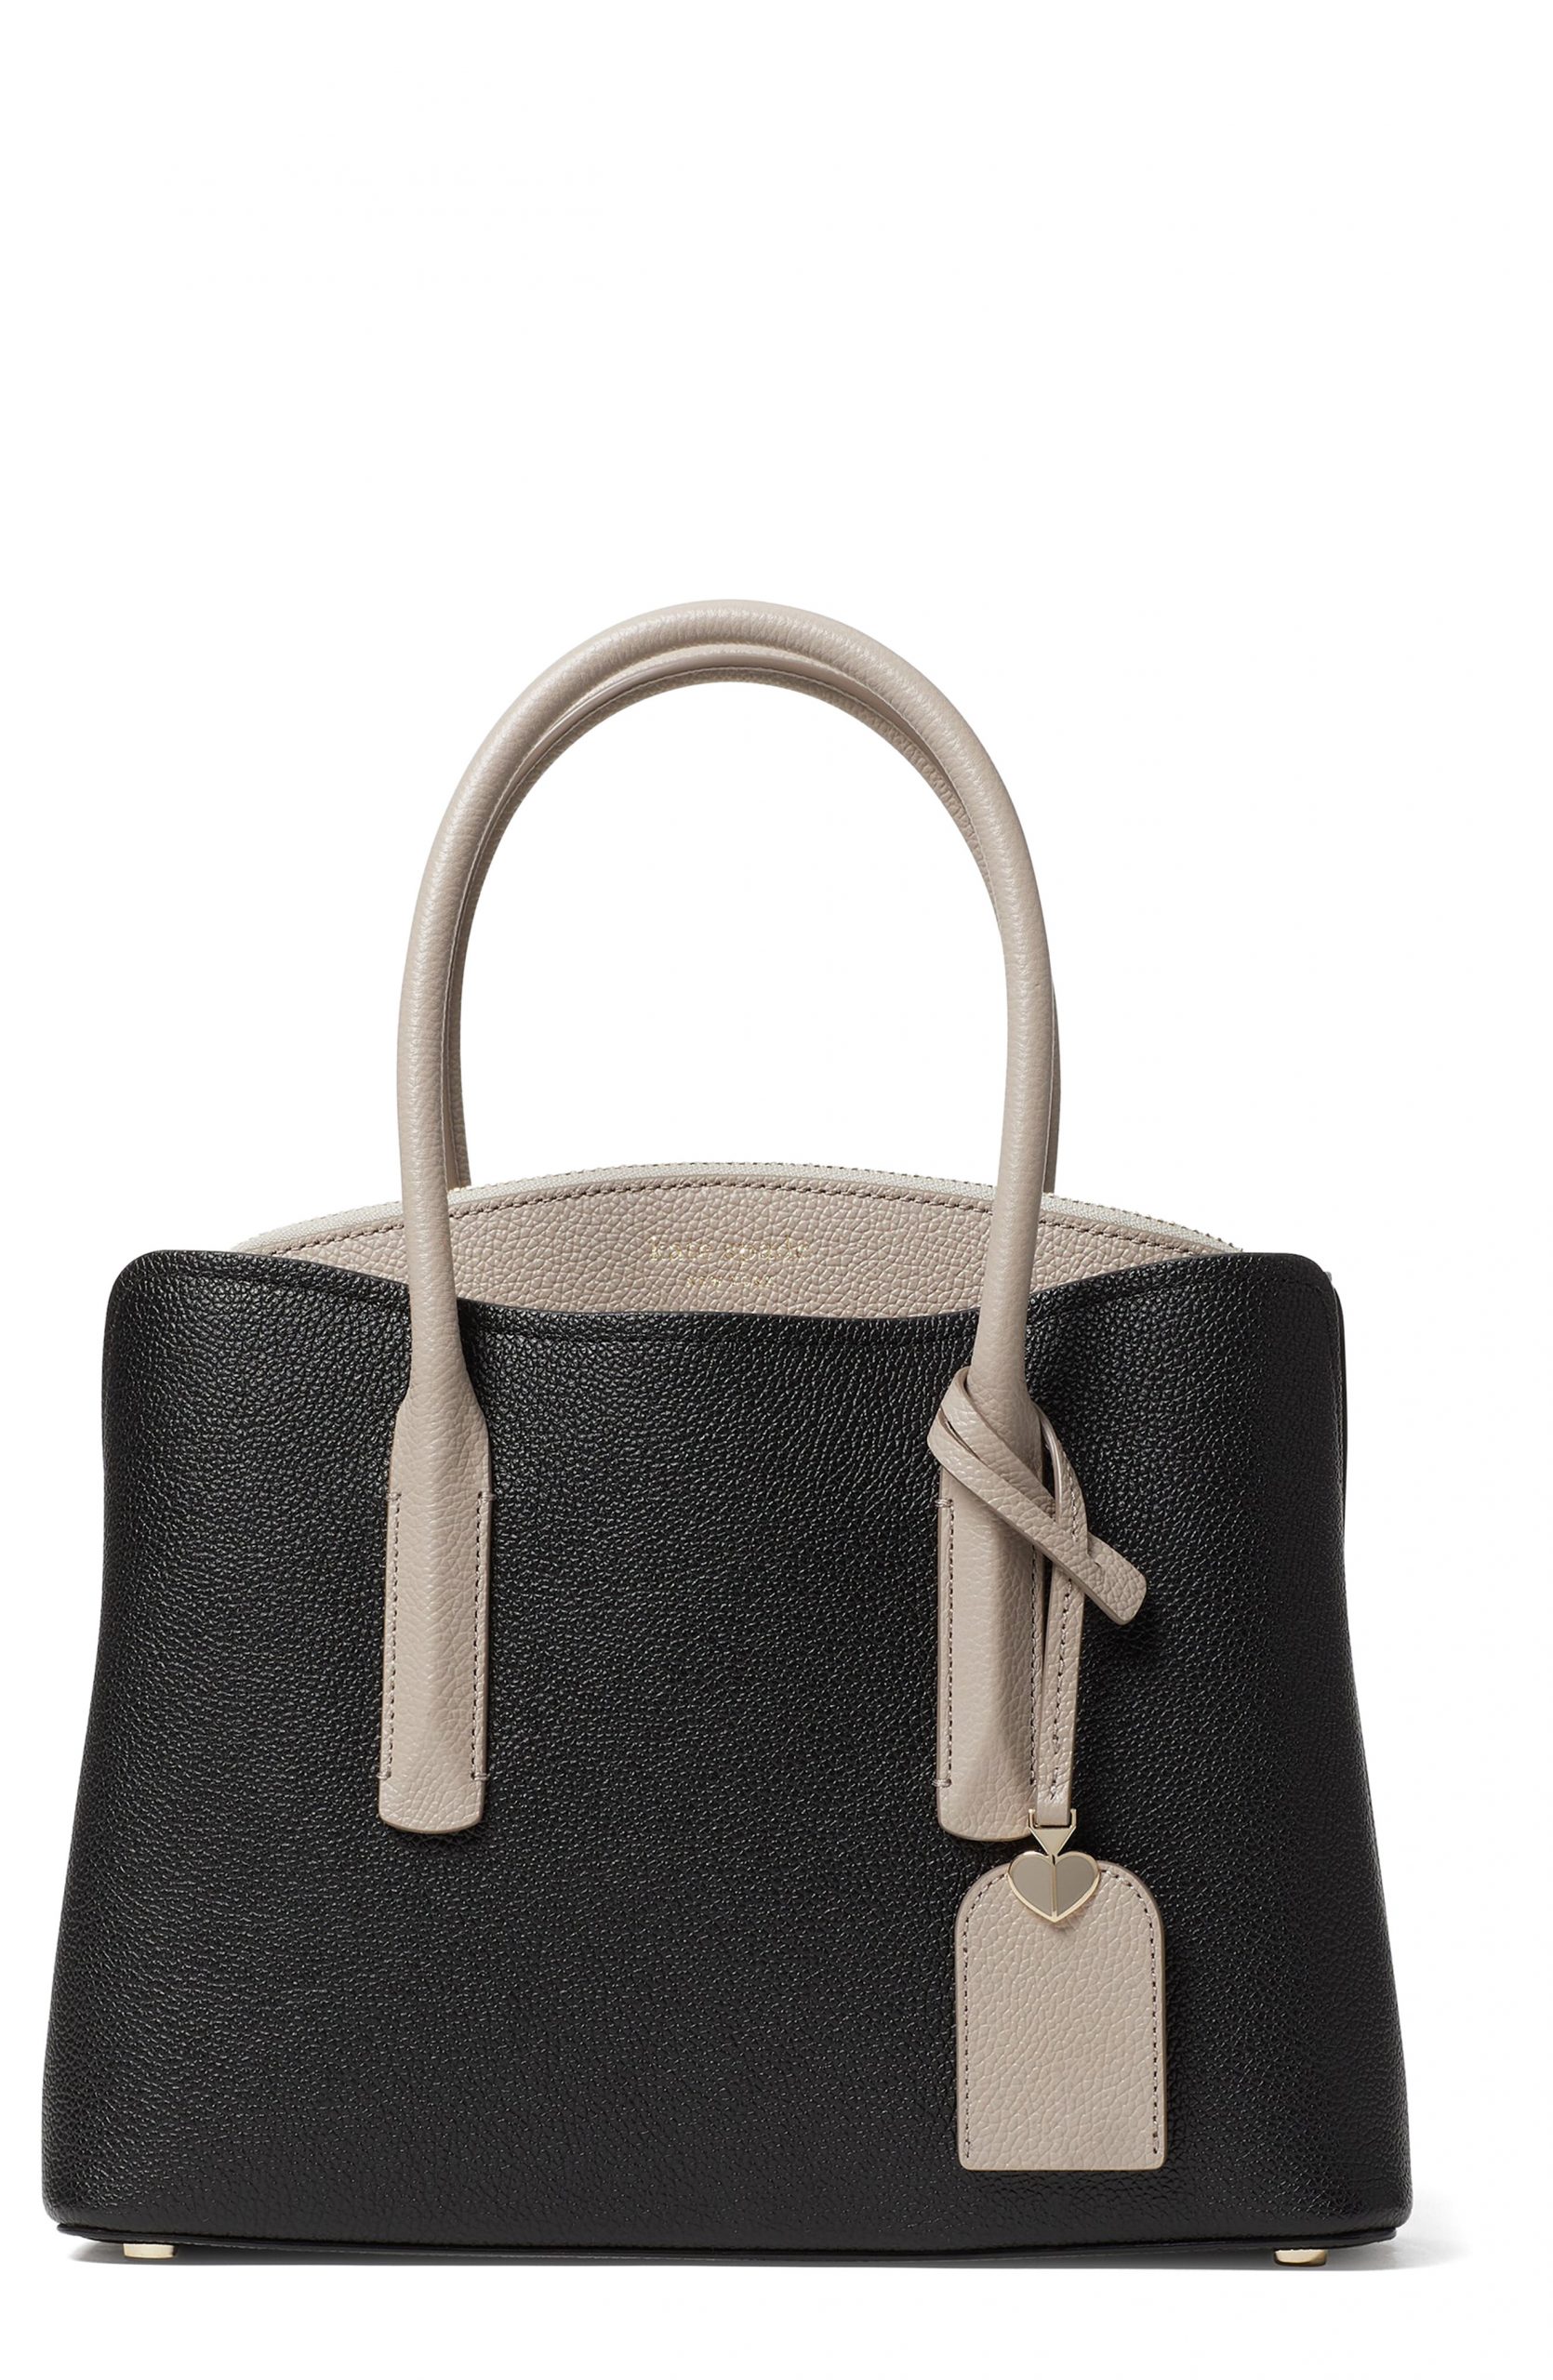 Kate Spade New York Medium Margaux Leather Satchel - Black | Fashion ...